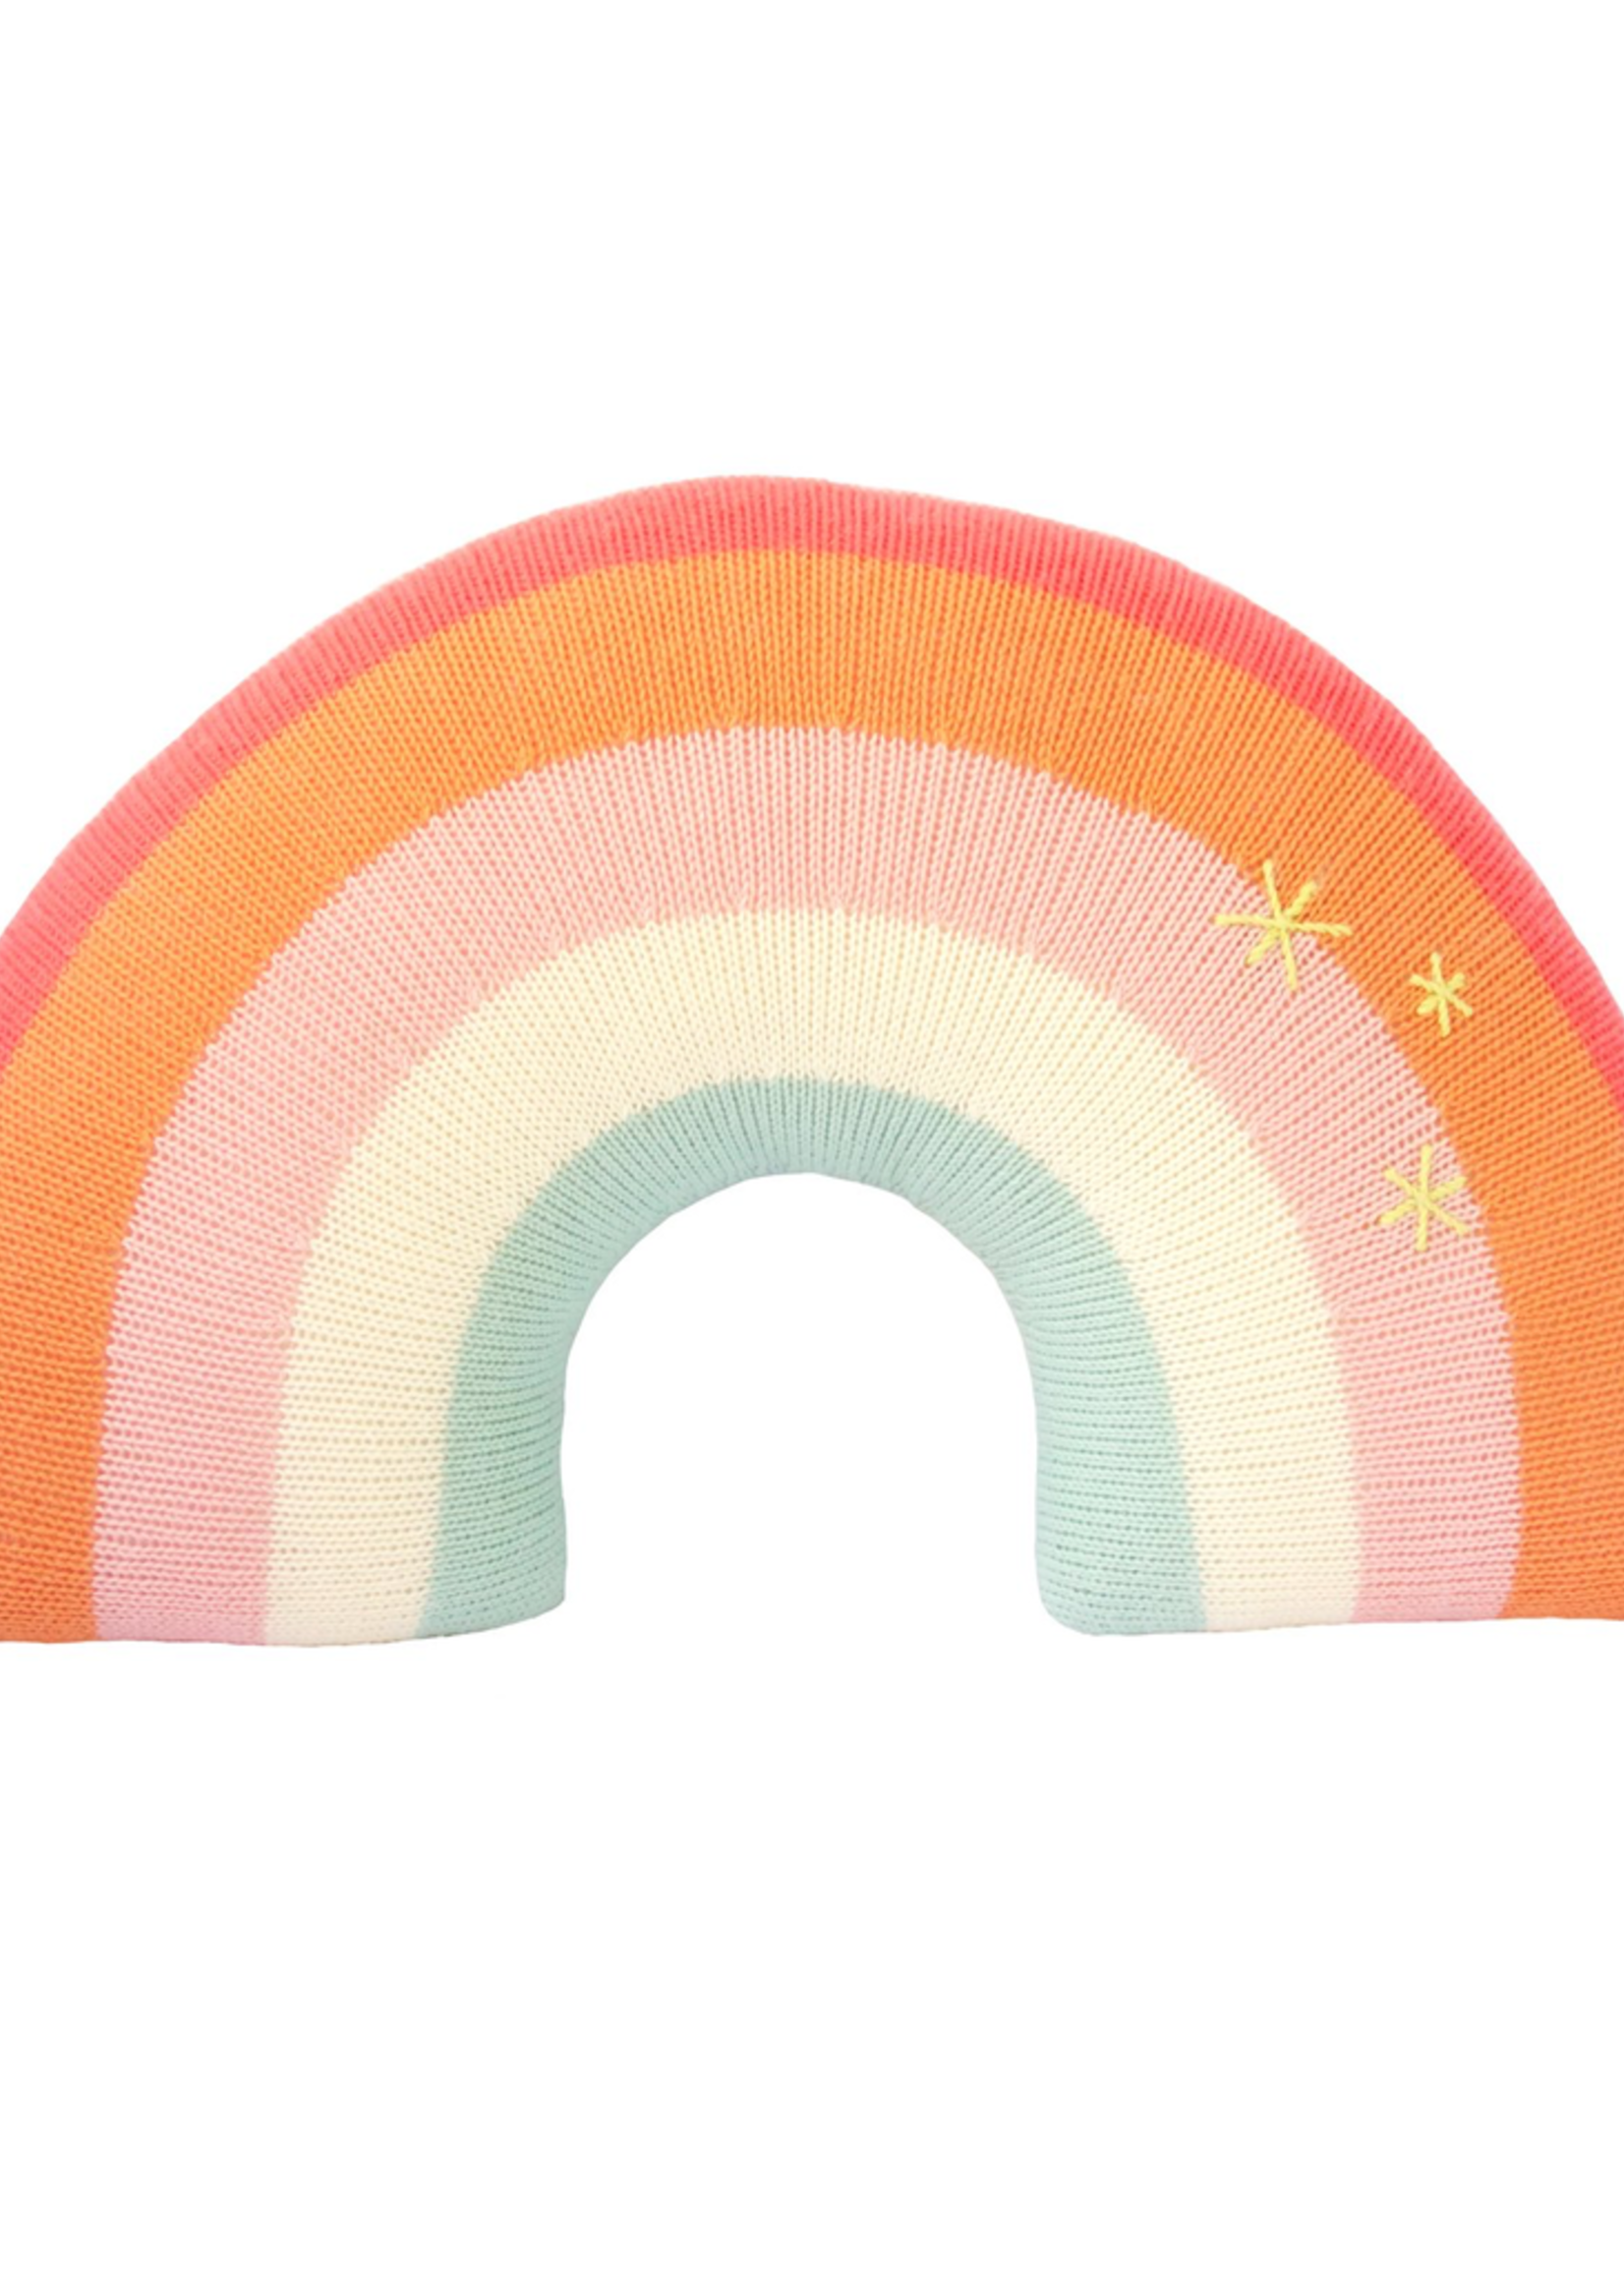 Blabla Rainbow Pillow Pink